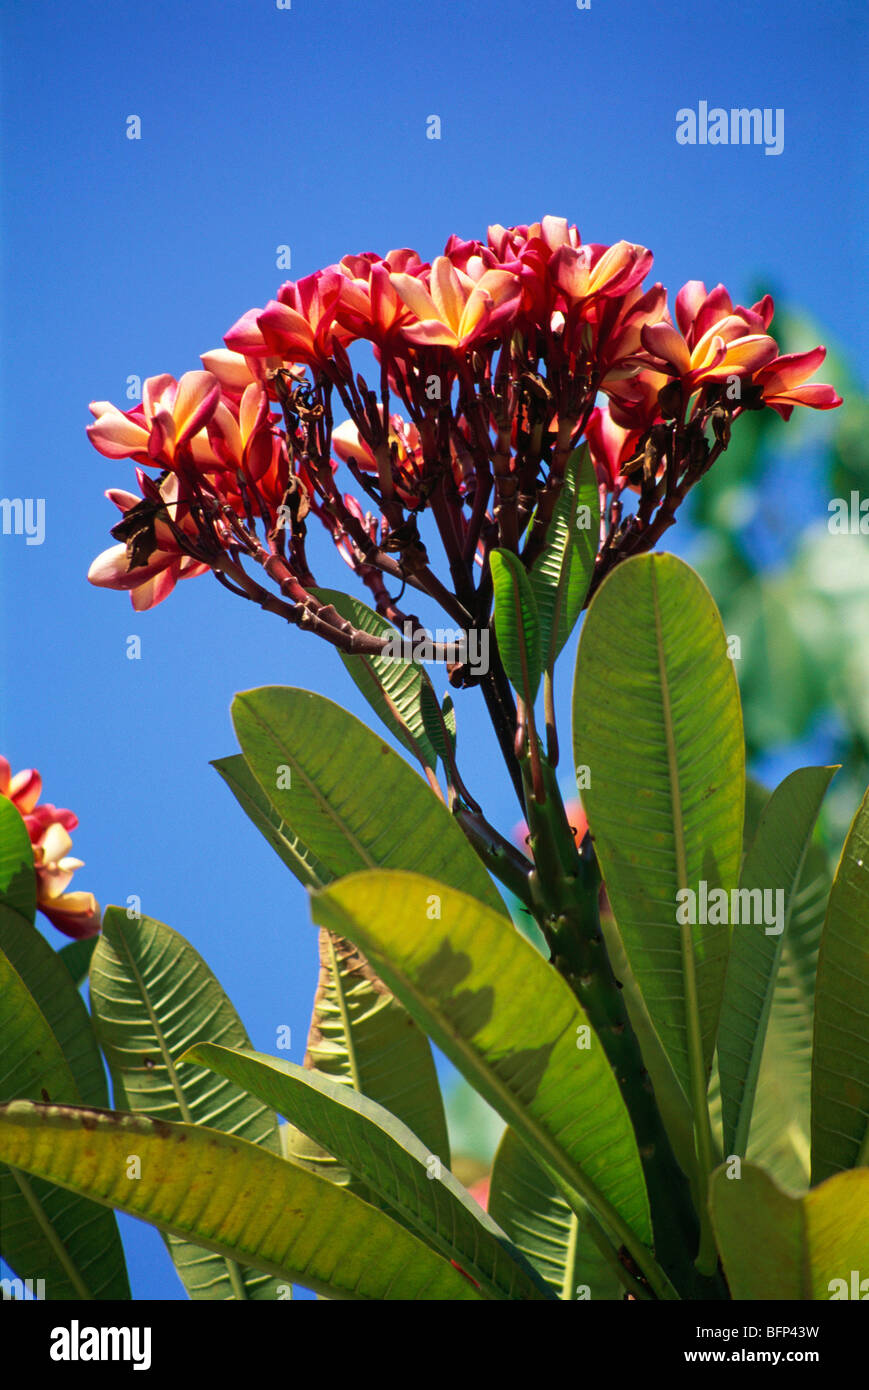 Champa tree flowers ; campaka tree flowers ; India ; asia Stock Photo